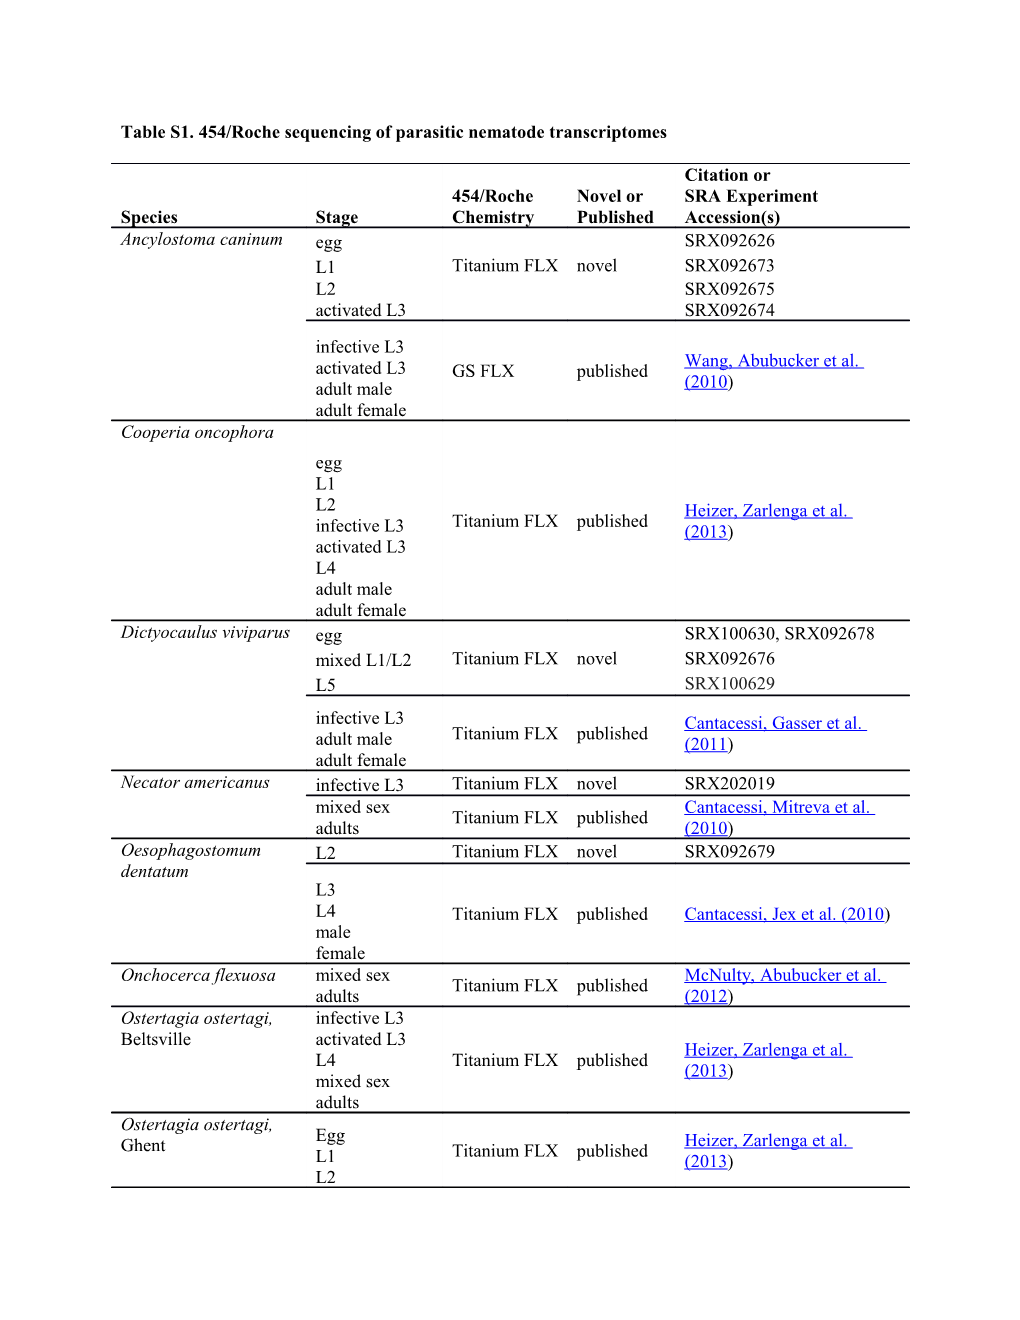 Table S1. 454/Roche Sequencing of Parasitic Nematode Transcriptomes